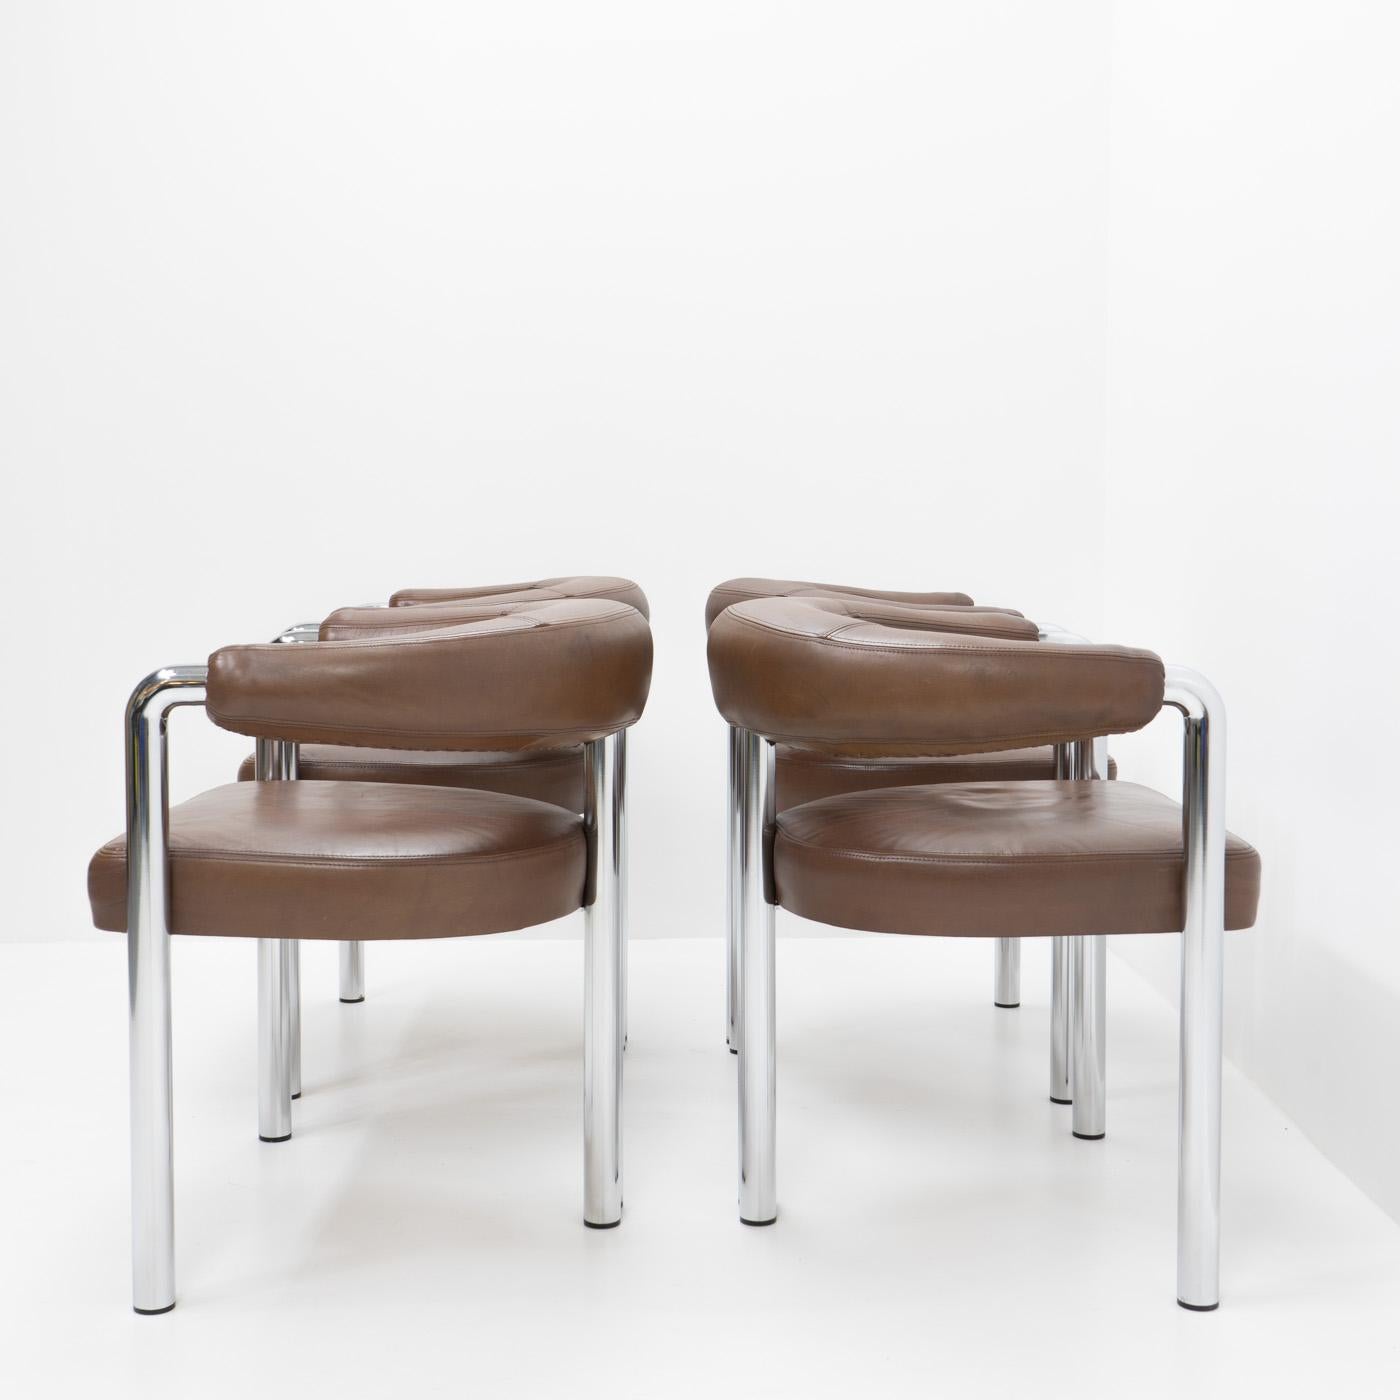 Steel De Sede Dining Chairs by Nienkamper in Brown Leather, 1980s For Sale